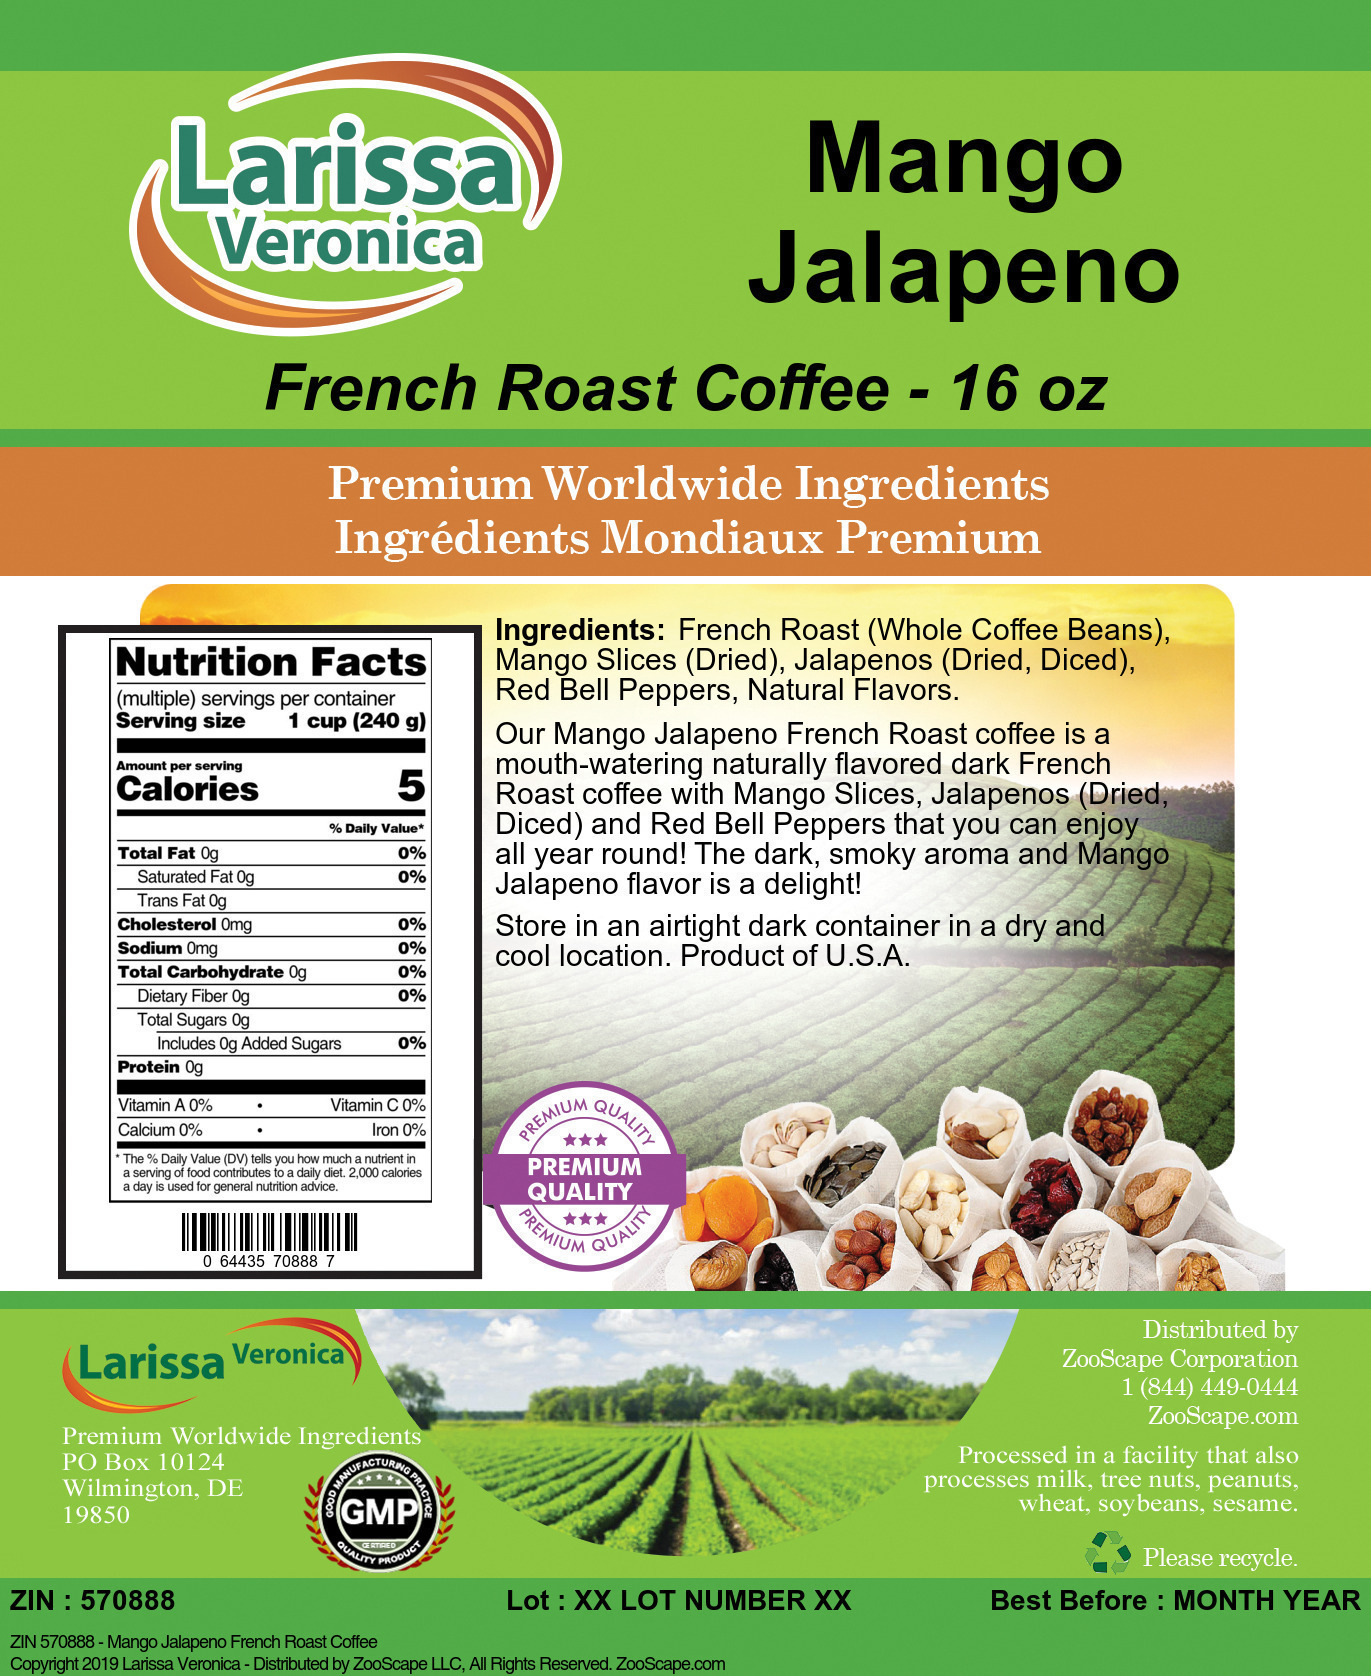 Mango Jalapeno French Roast Coffee - Label